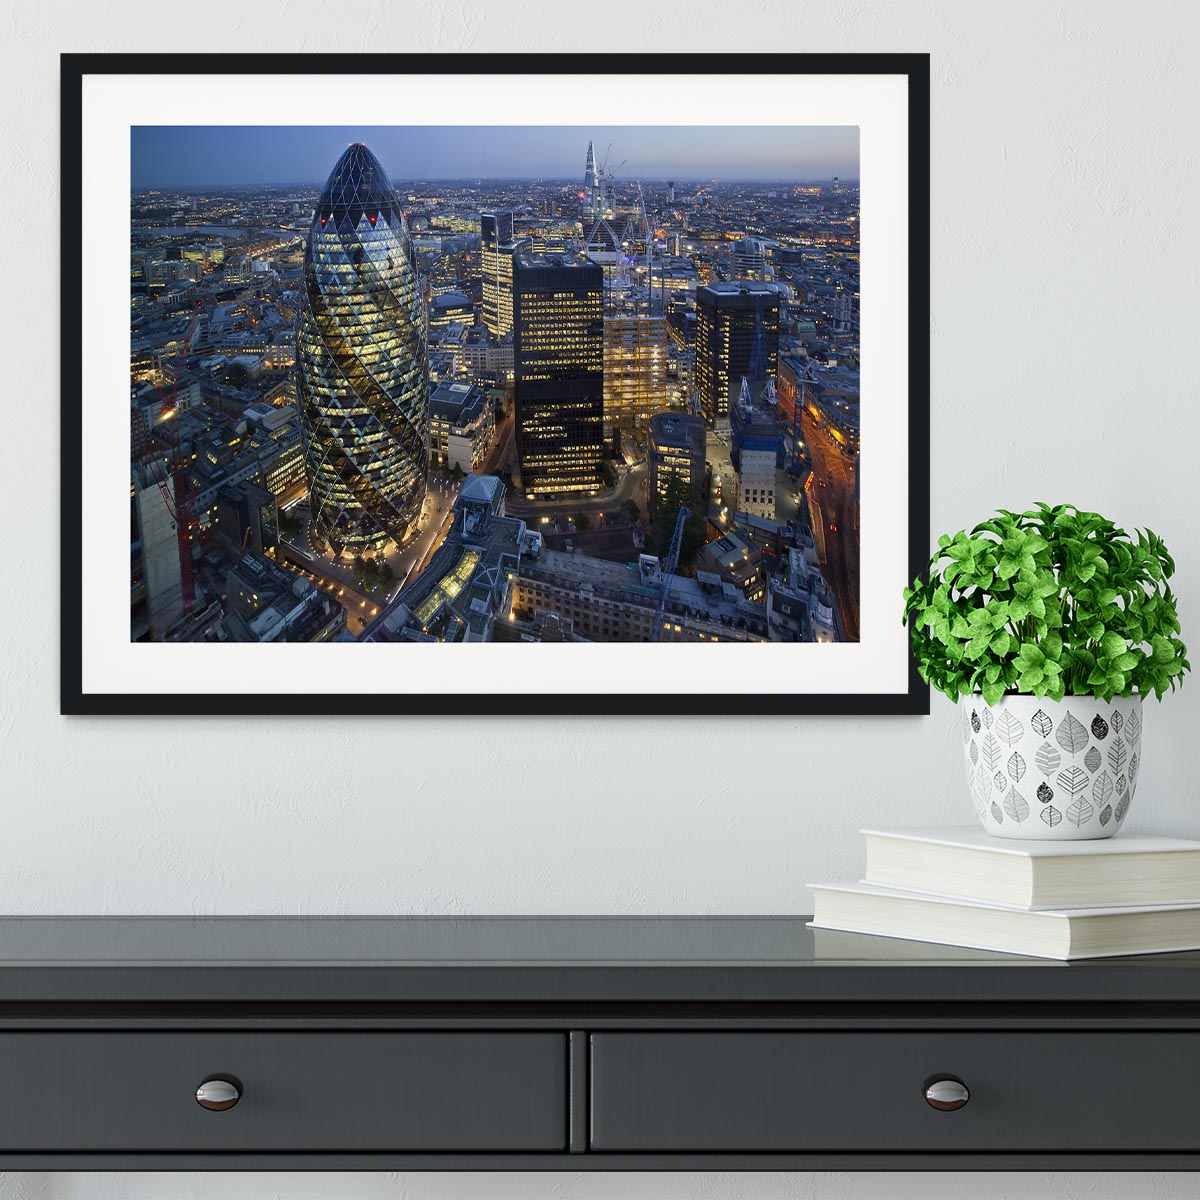 City of London lit up at night Framed Print - Canvas Art Rocks - 1